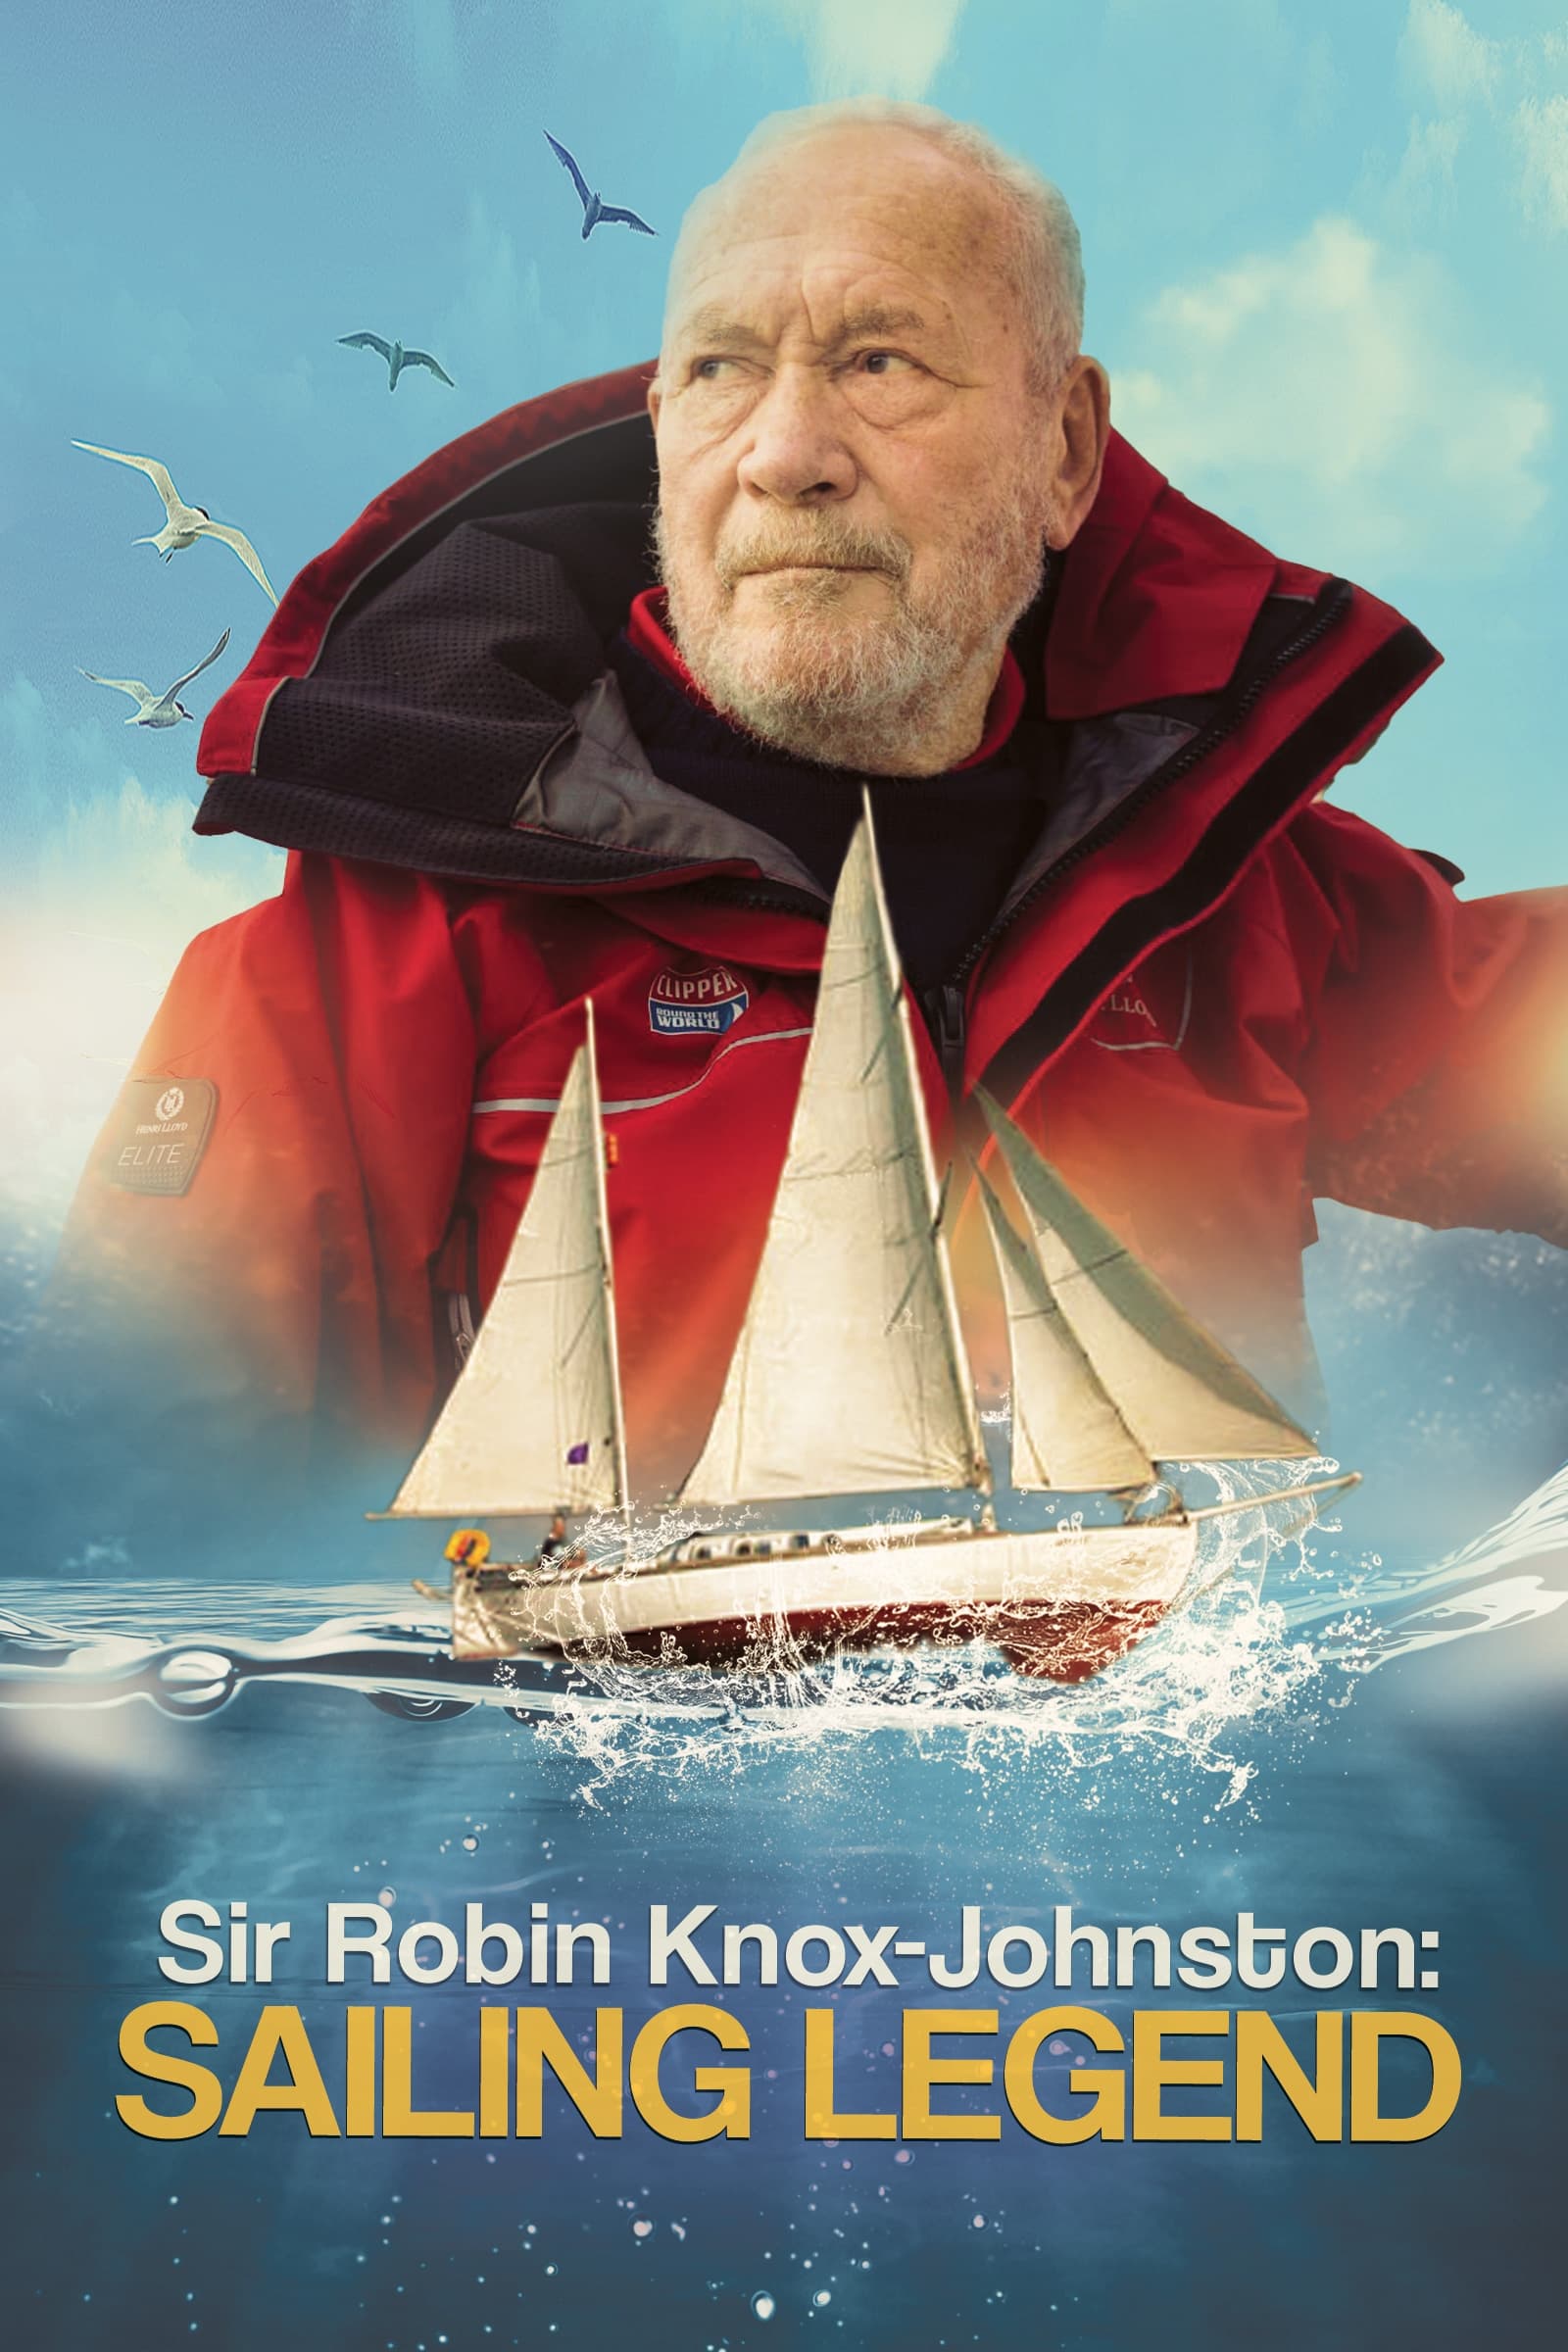 Sir Robin Knox-Johnston: Sailing Legend on FREECABLE TV